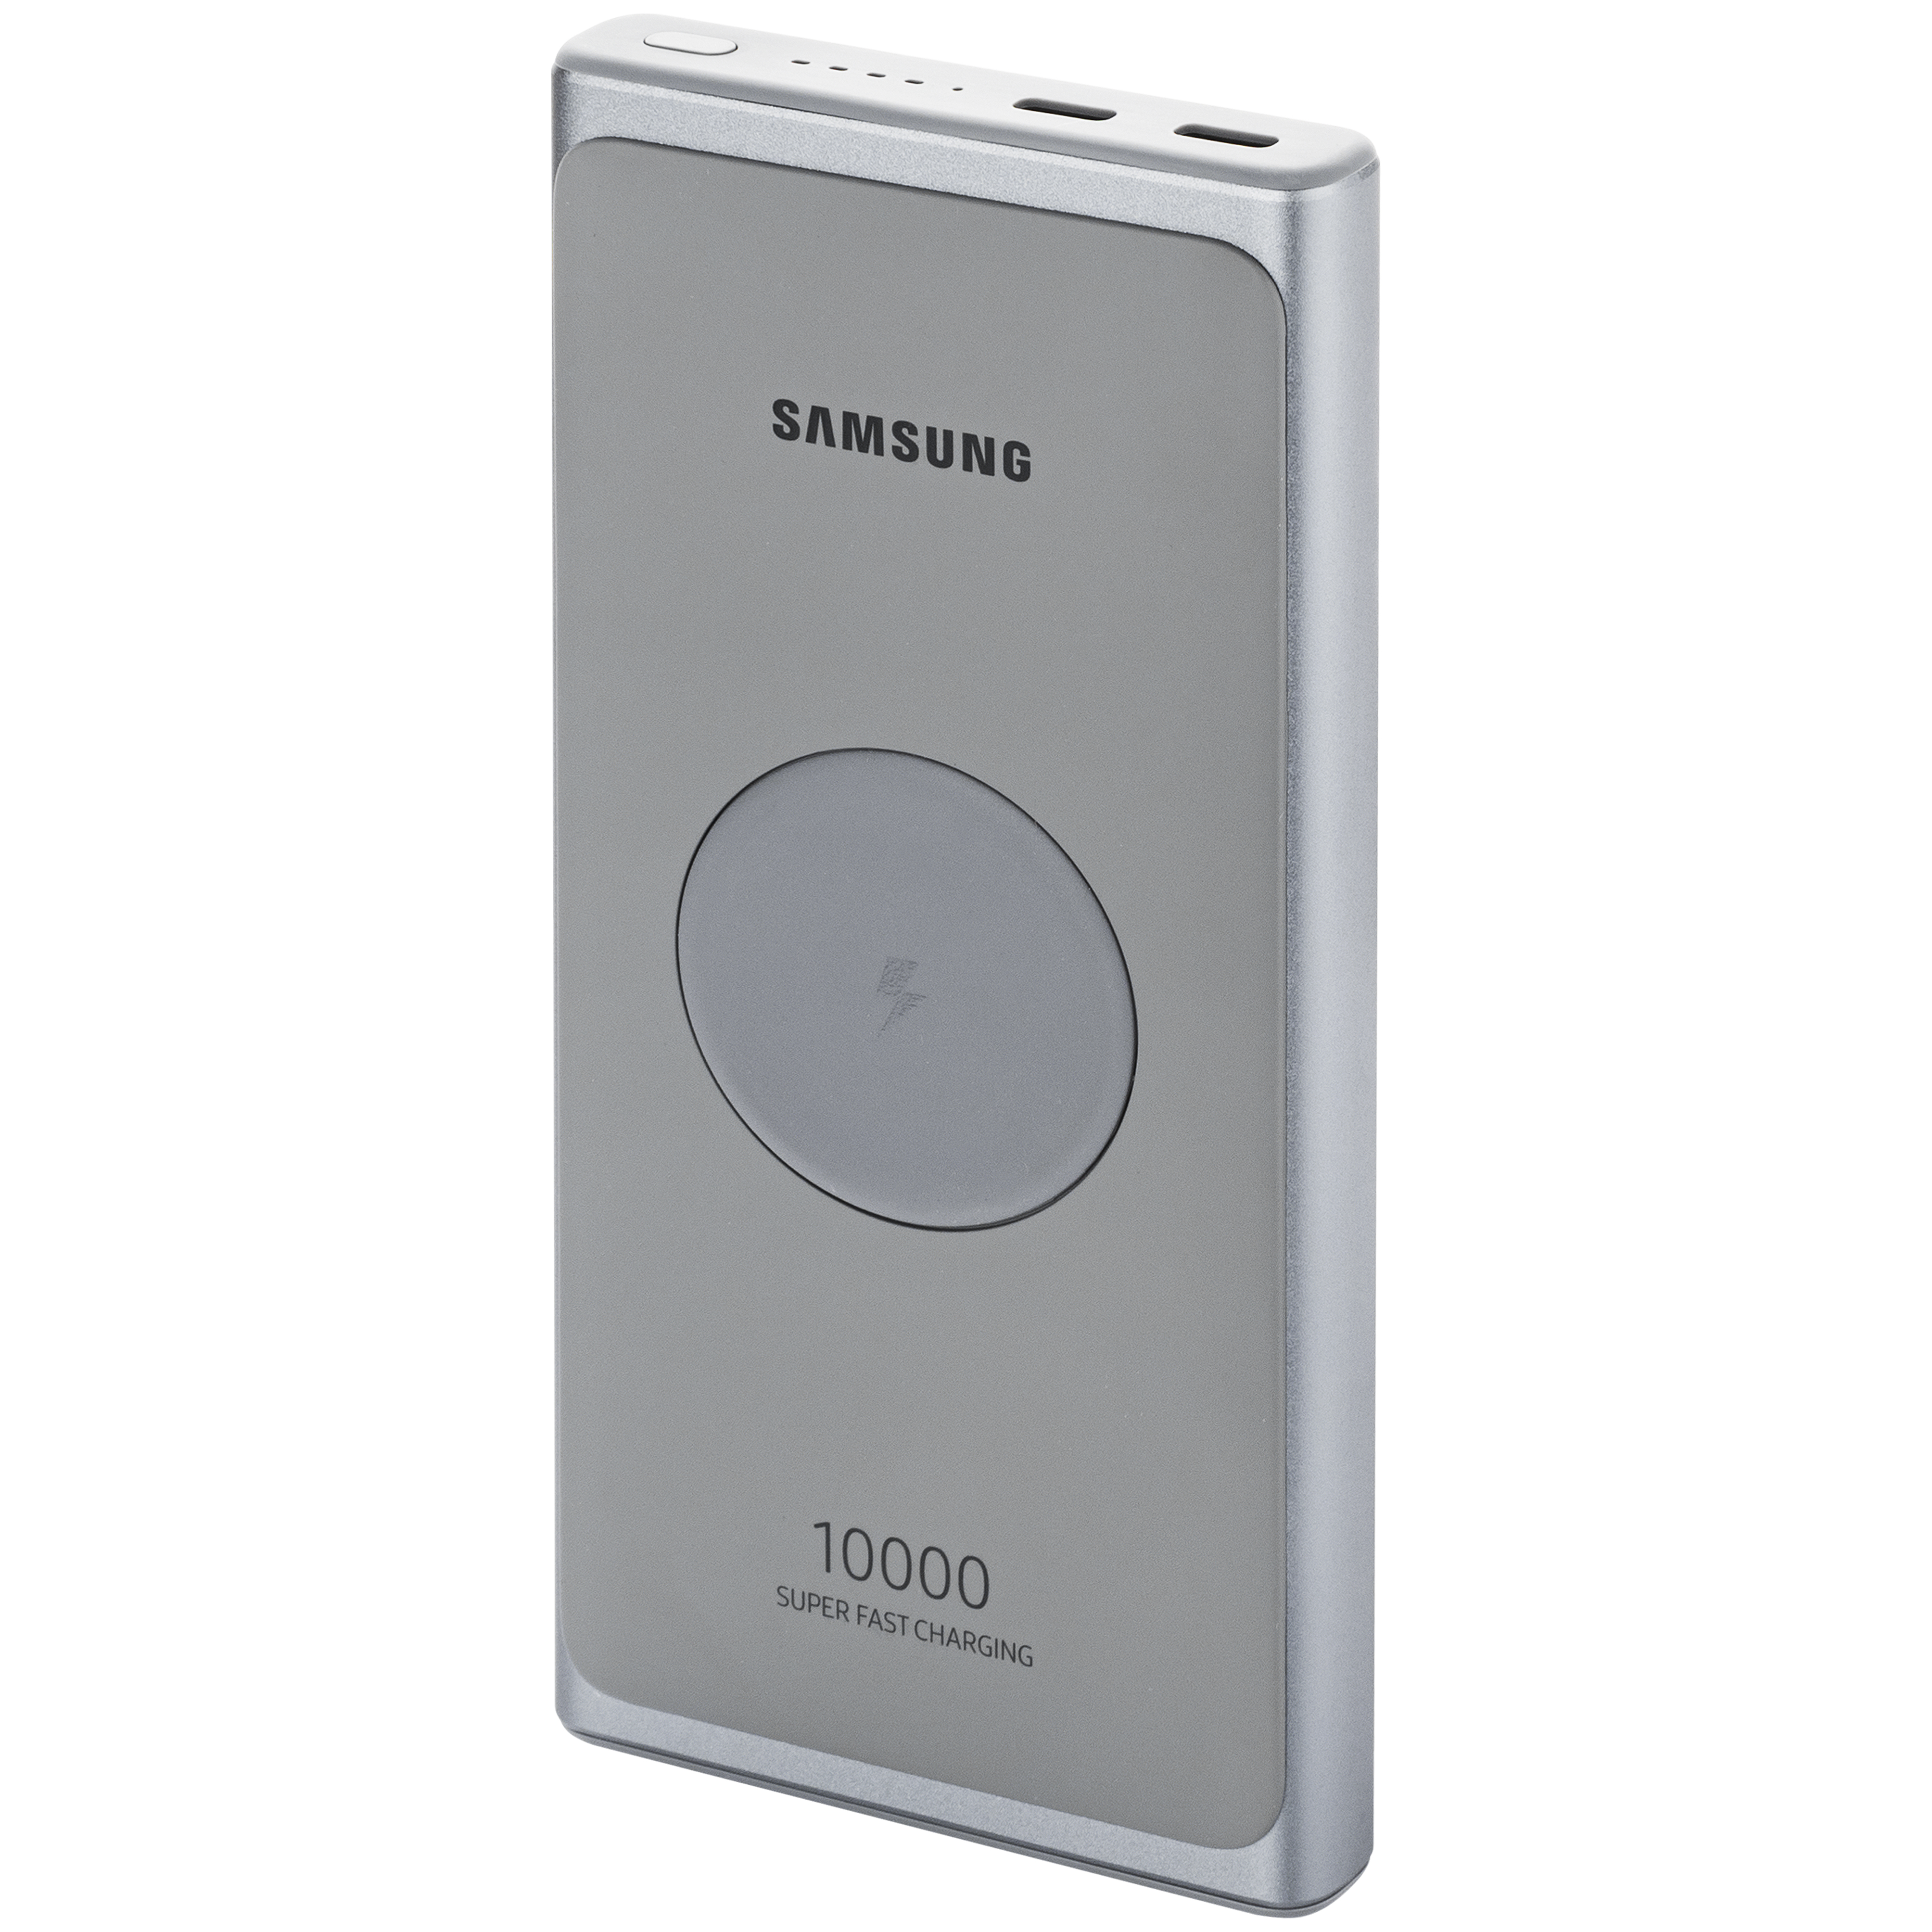 Серый повербанк Samsung EB-U3300, 10000mAh, 25W, FC, USB Type-C, Wirel. Char. Gray (EB-U3300XJRGRU)